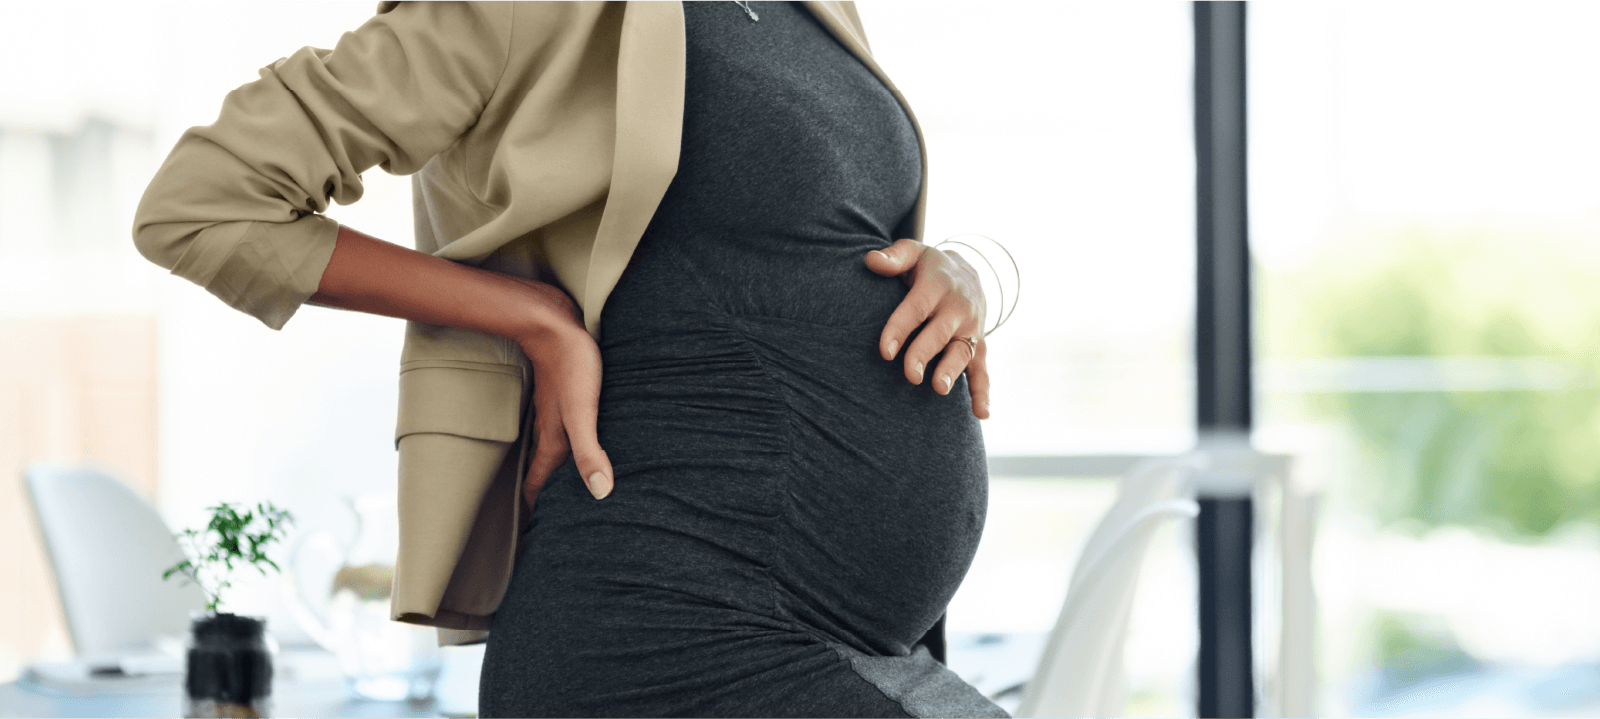 Fetal Growth & Wellbeing Scan | Third Trimester